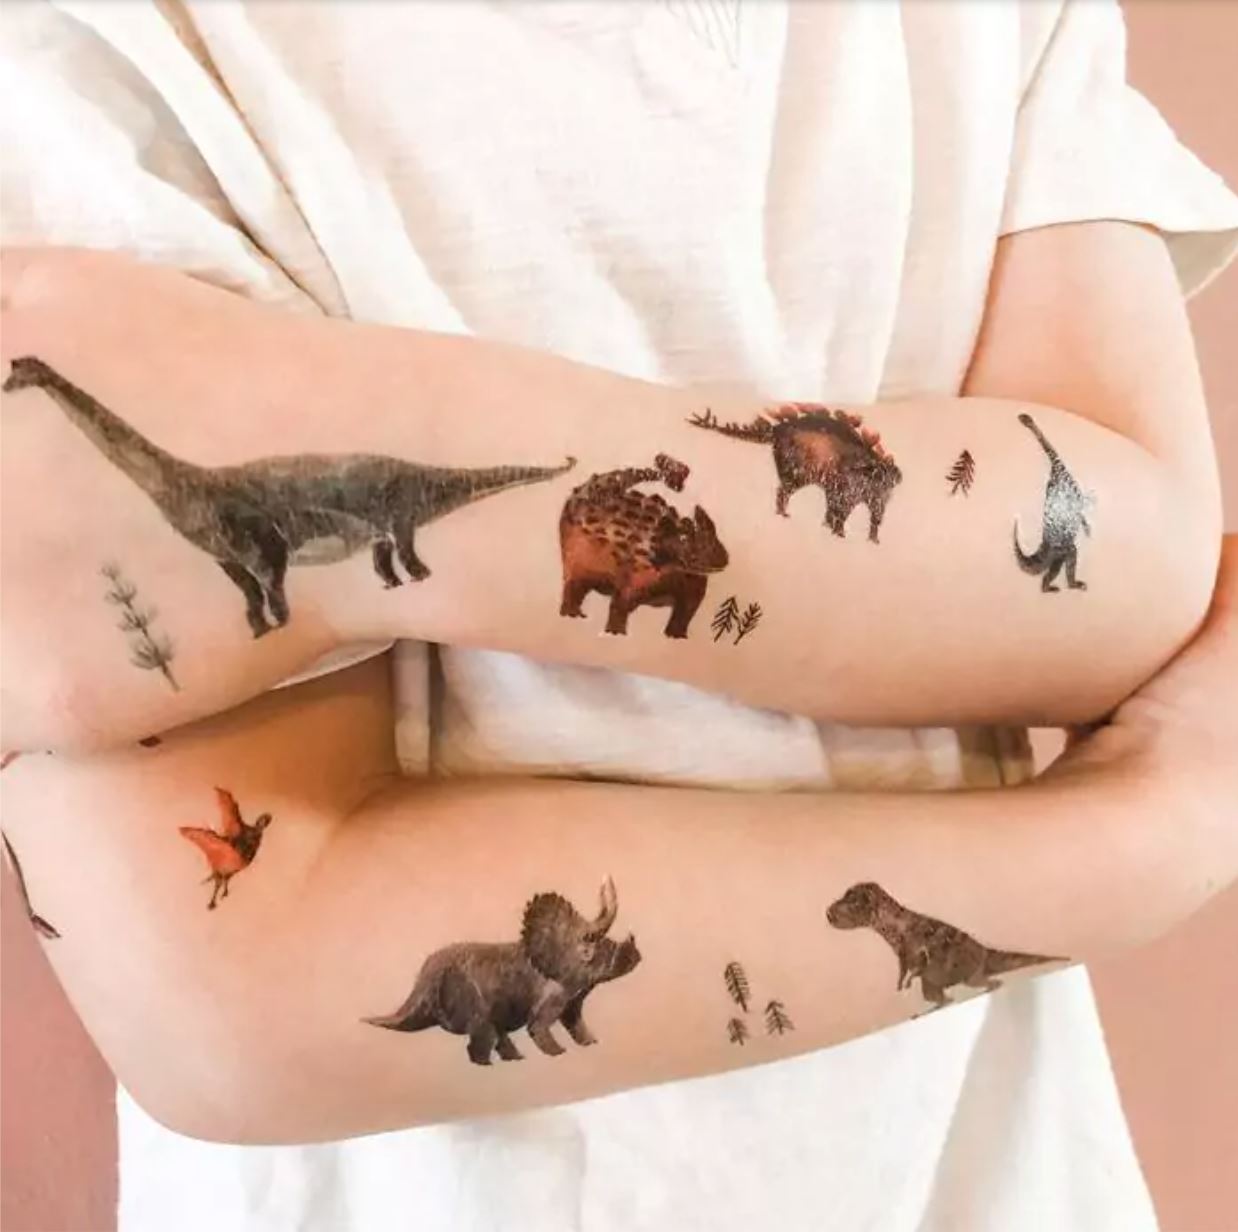 Bio Tattoos "Dinosaurier" Tattoo Nuukk 